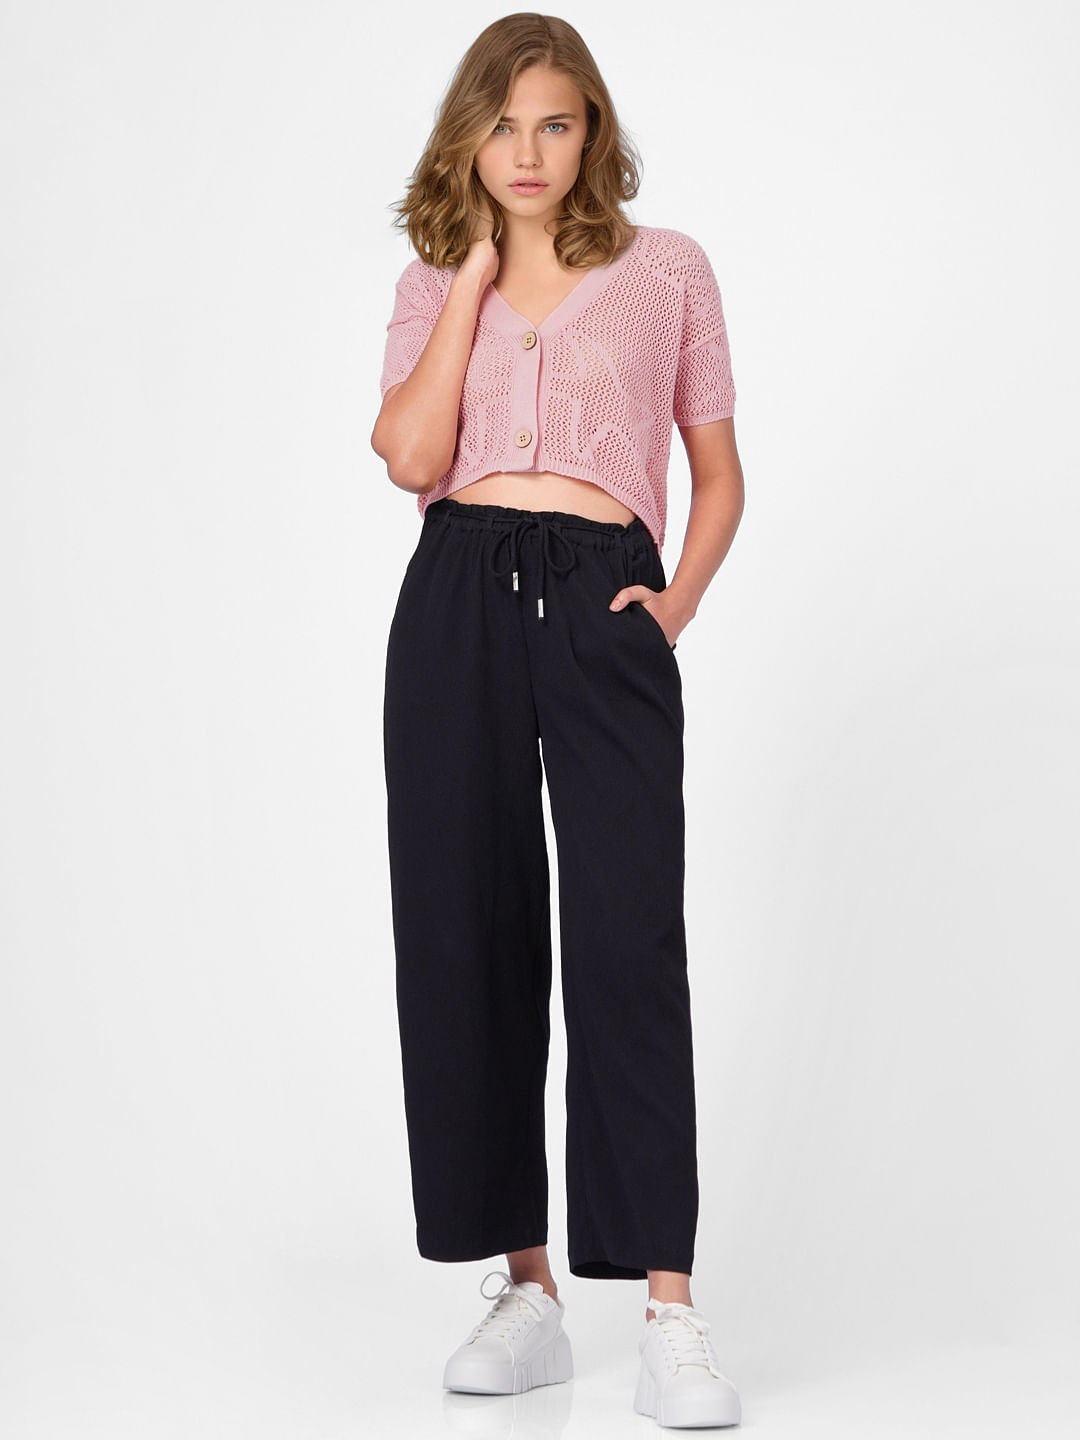 Shop Women's Relaxed Fit Pants | SeamsFriendly